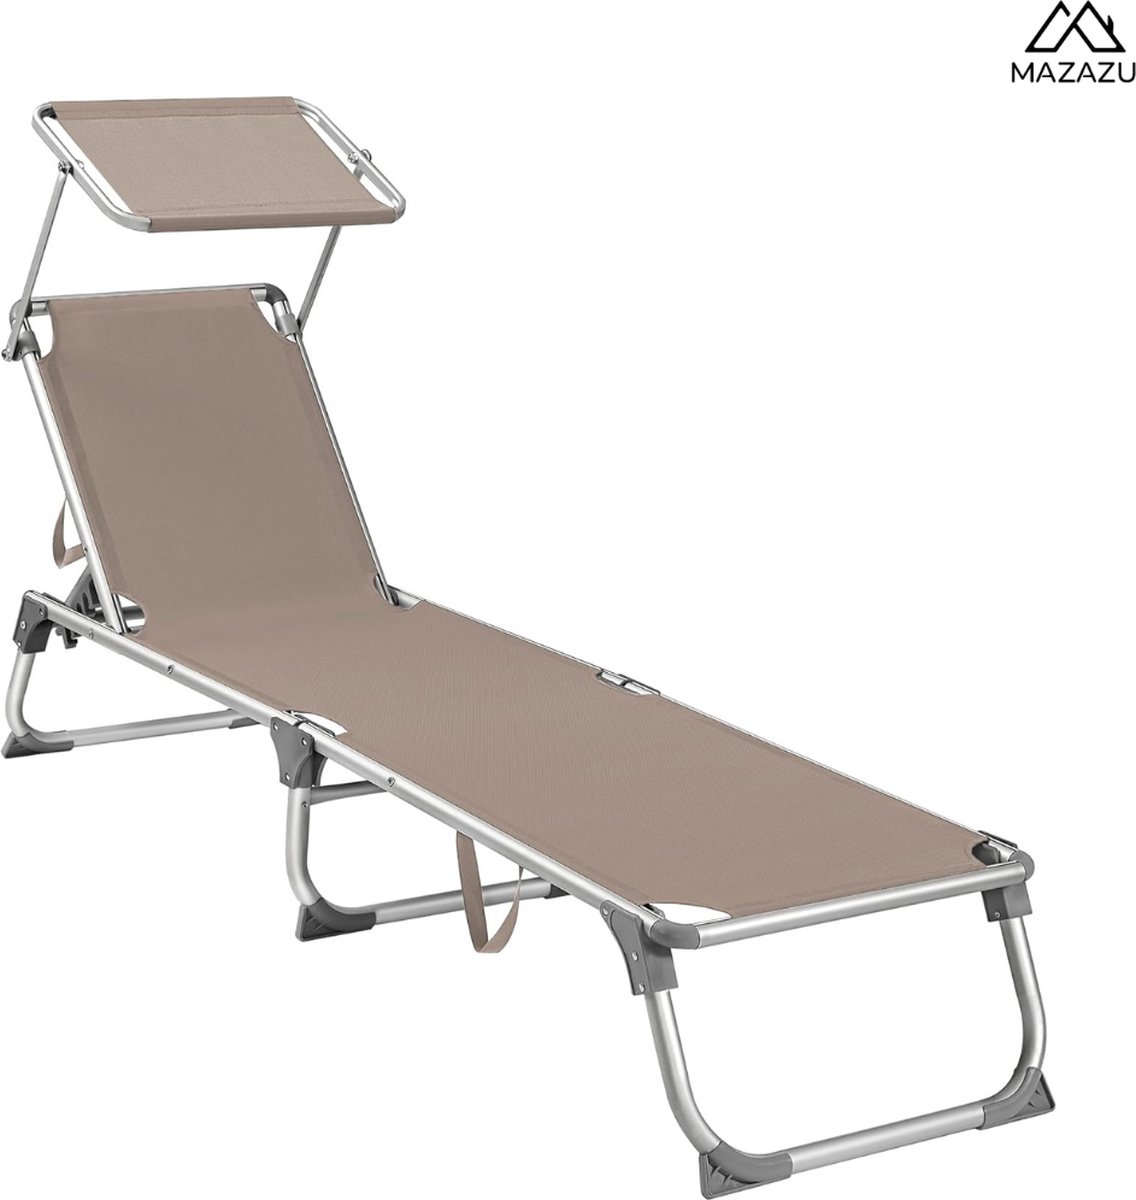 MIRA Home - Ligstoel - Ligstoel met zonnescherm - Tuin - Opvouwbaar ligbed - 55x193x31